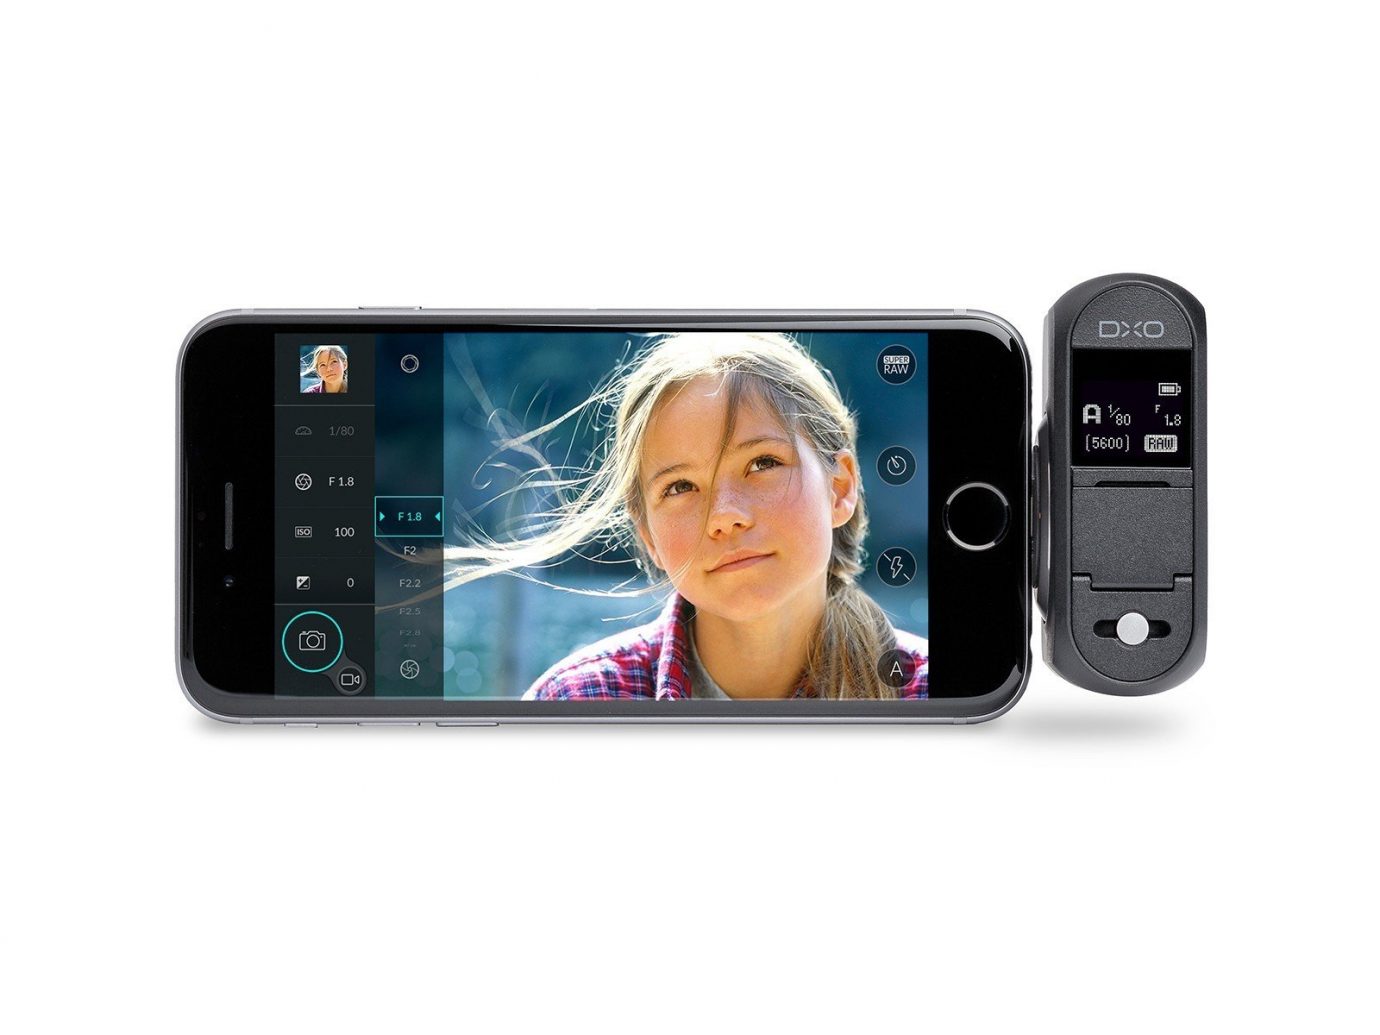 Travel Tips digital camera product camera cameras & optics electronics mobile phone multimedia smartphone mp3 player gadget technology